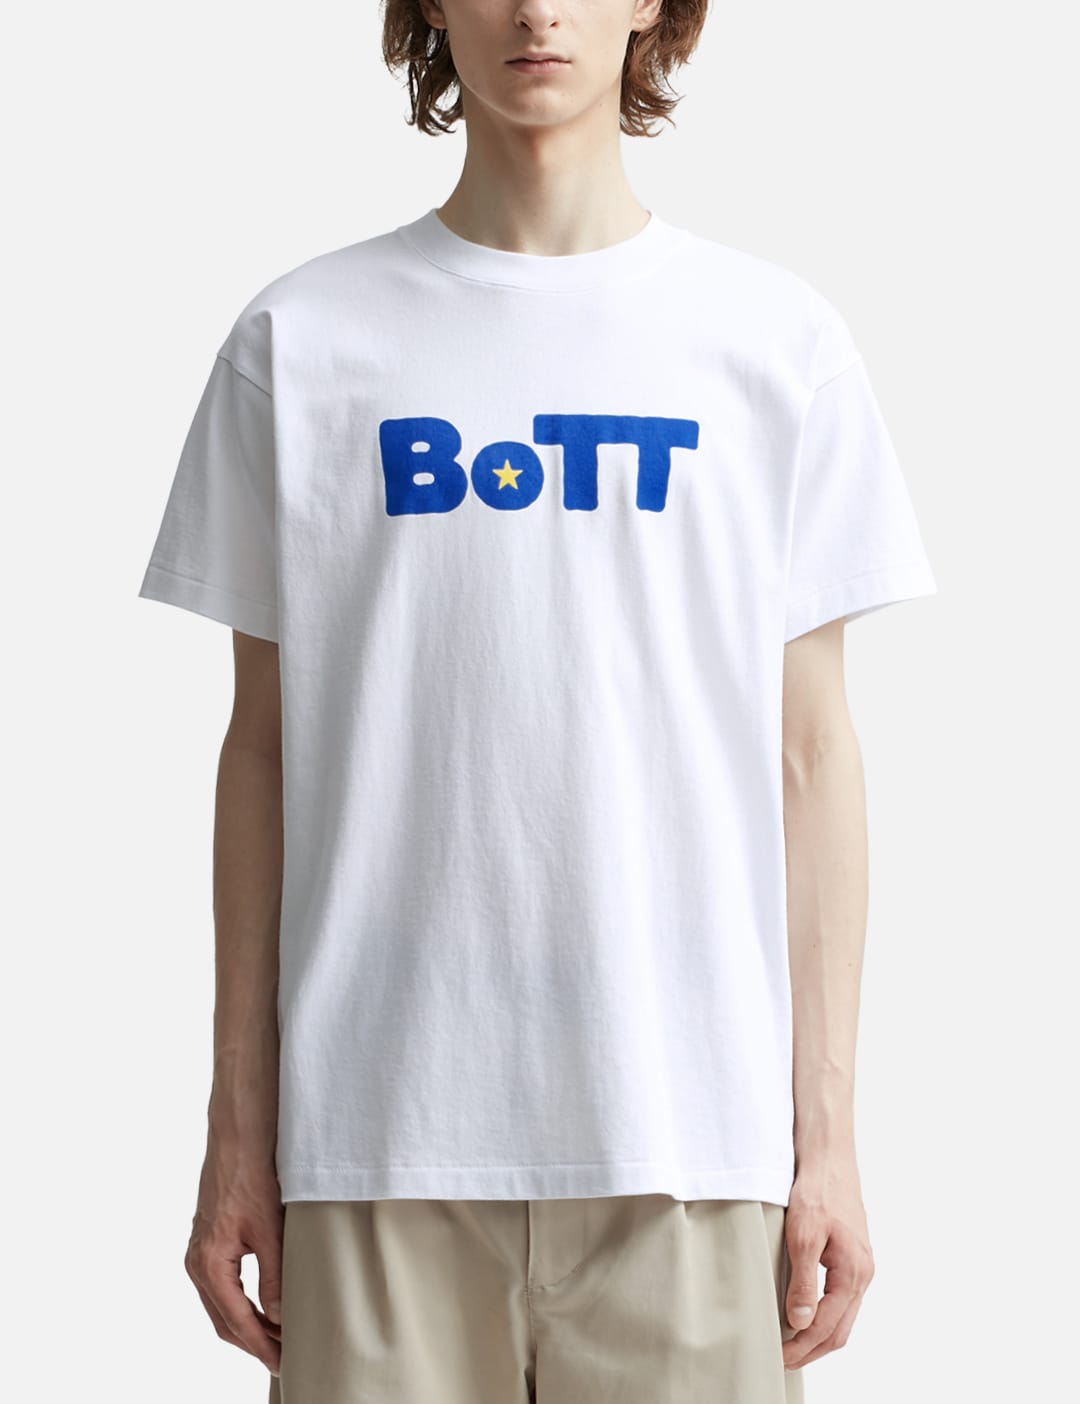 BoTT - スター ロゴ Tシャツ | HBX - ハイプビースト(Hypebeast)が厳選 